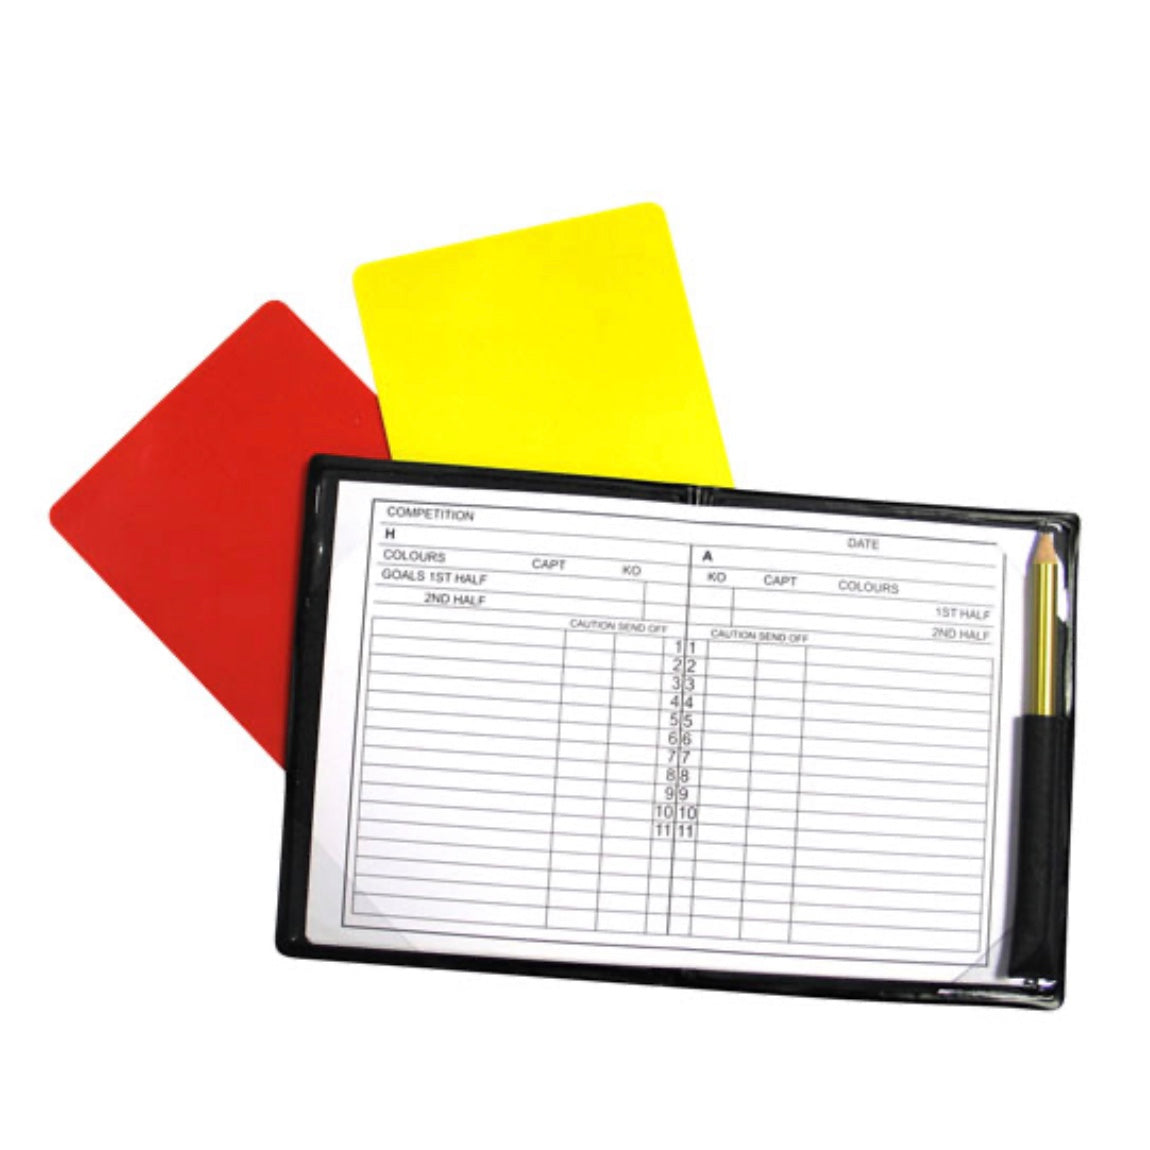 Referee Equipment MEGA Pack - Classic